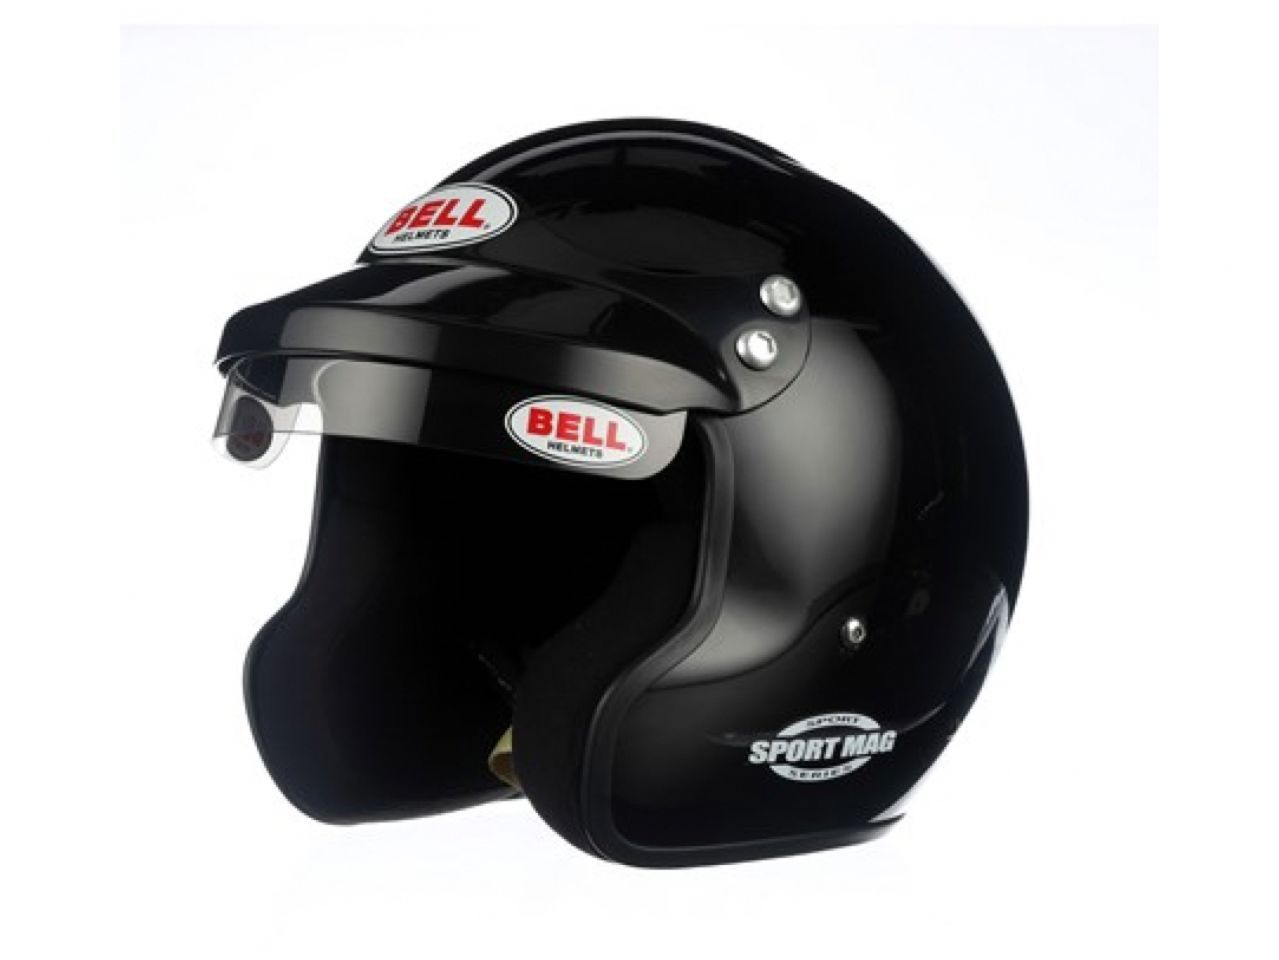 Bell Helmets 1426013 Item Image